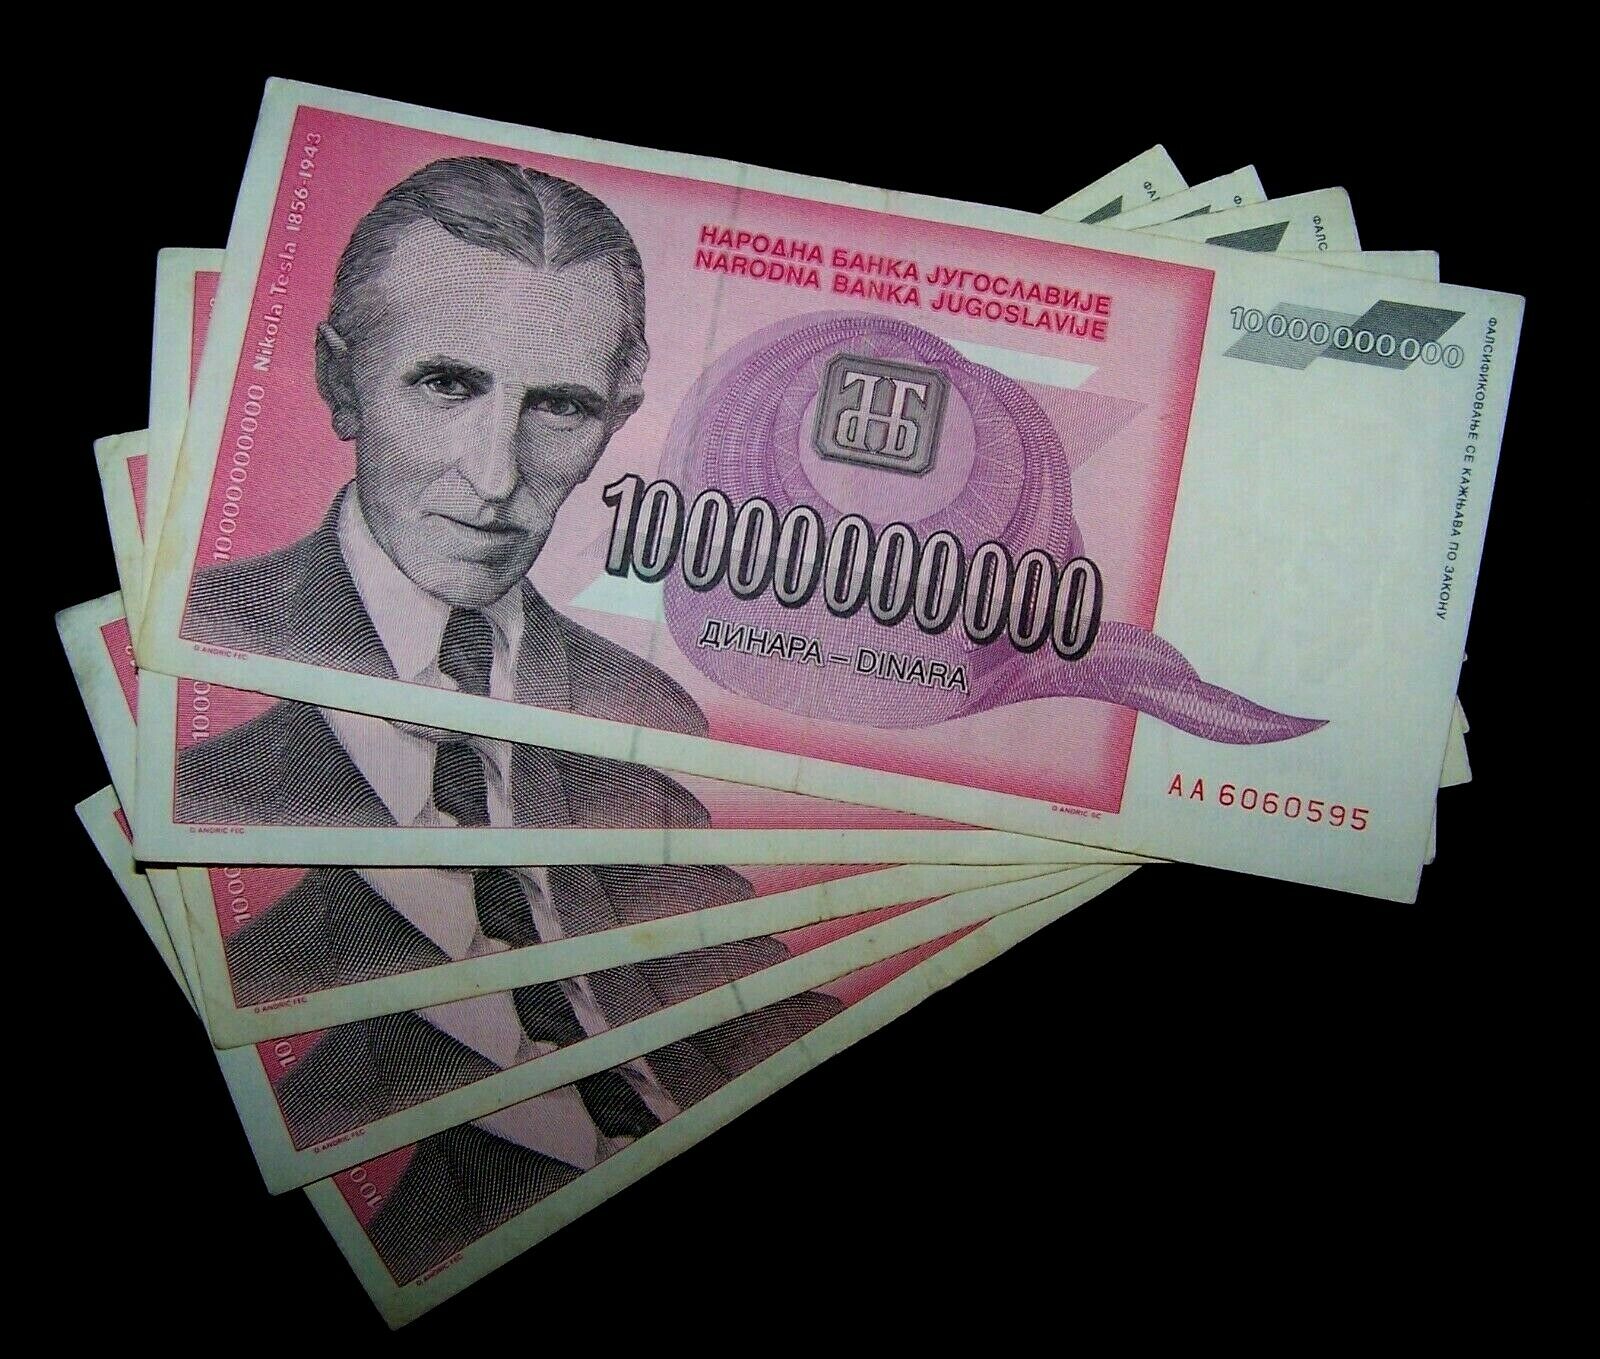 5 Pcs X 10 Billion Yugoslavia Dinara Banknotes- Nikola Tesla P-127 Currency